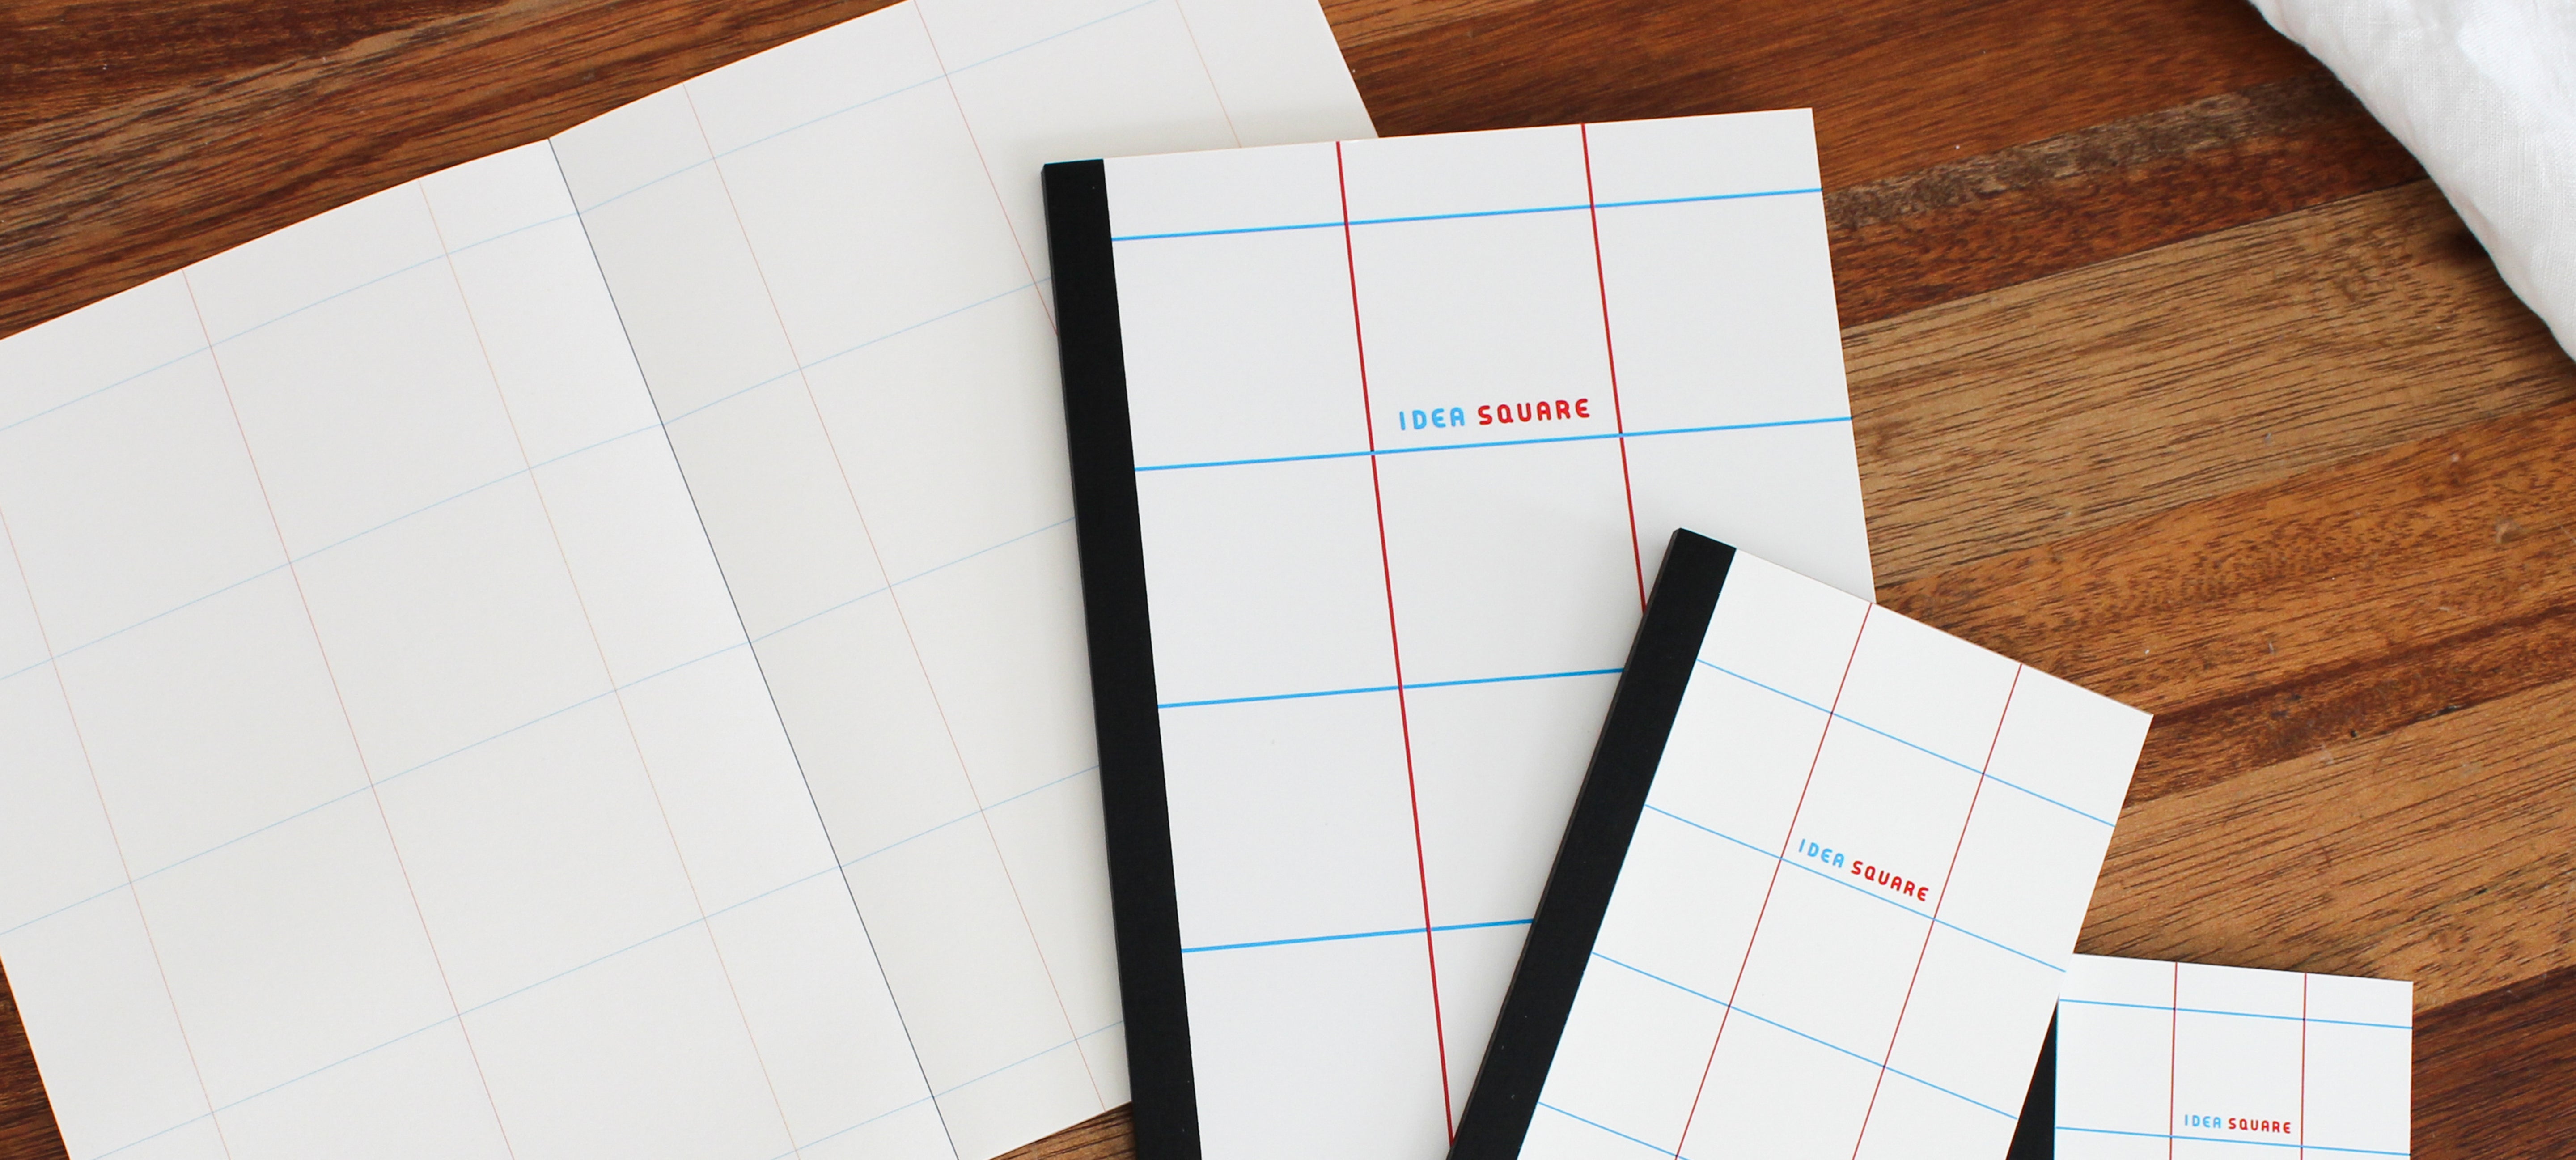 Idea Square Notebook Header